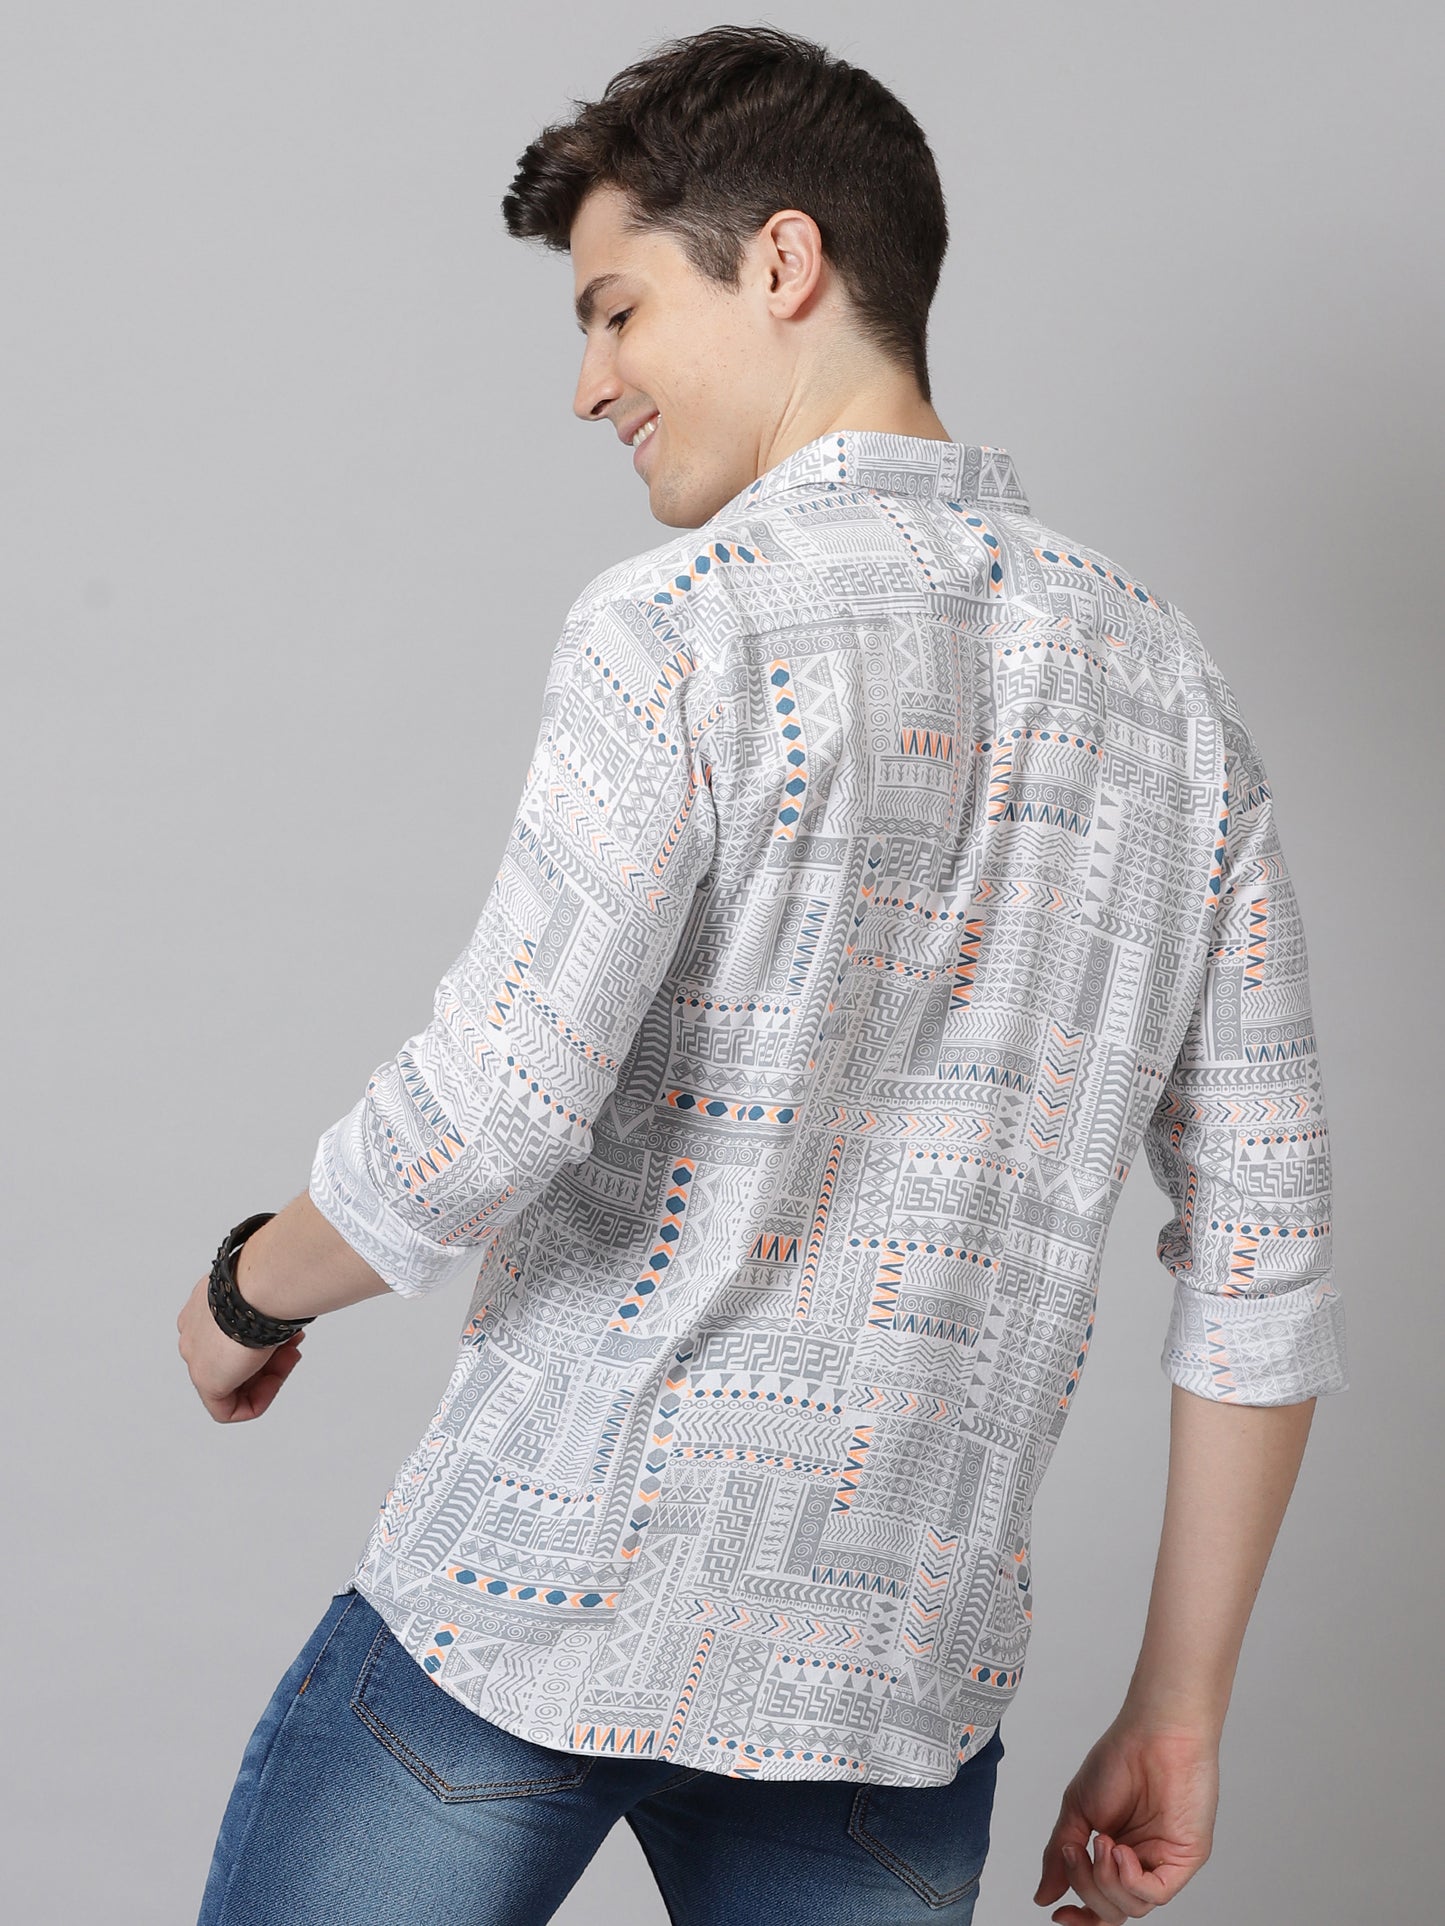 Intricate Matrix Full-Sleeve Casual Shirt